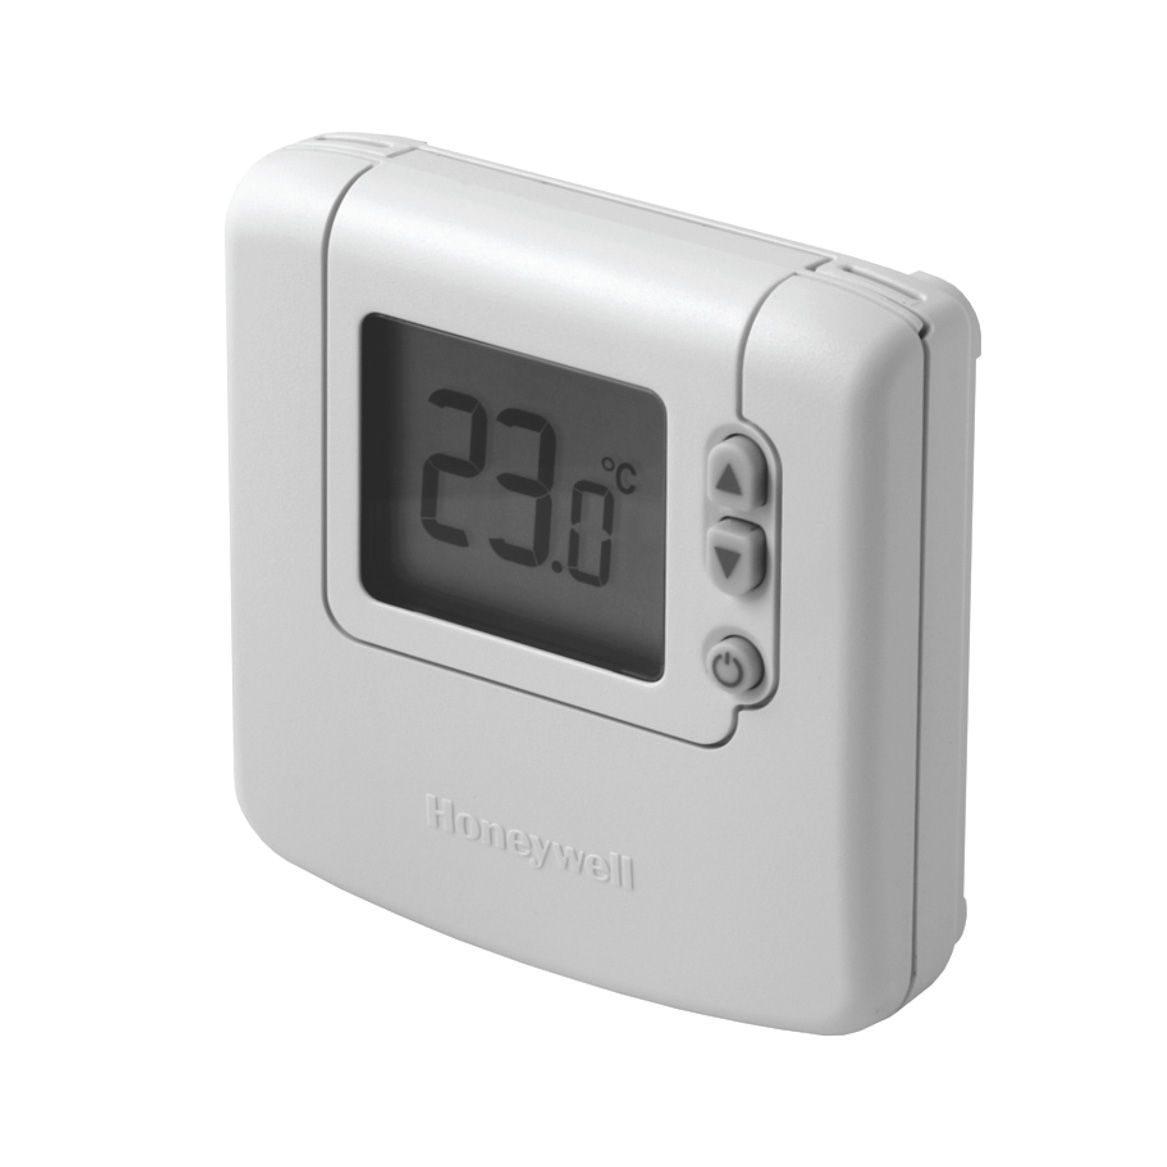 Honeywell DT90 Digital Room Thermostat